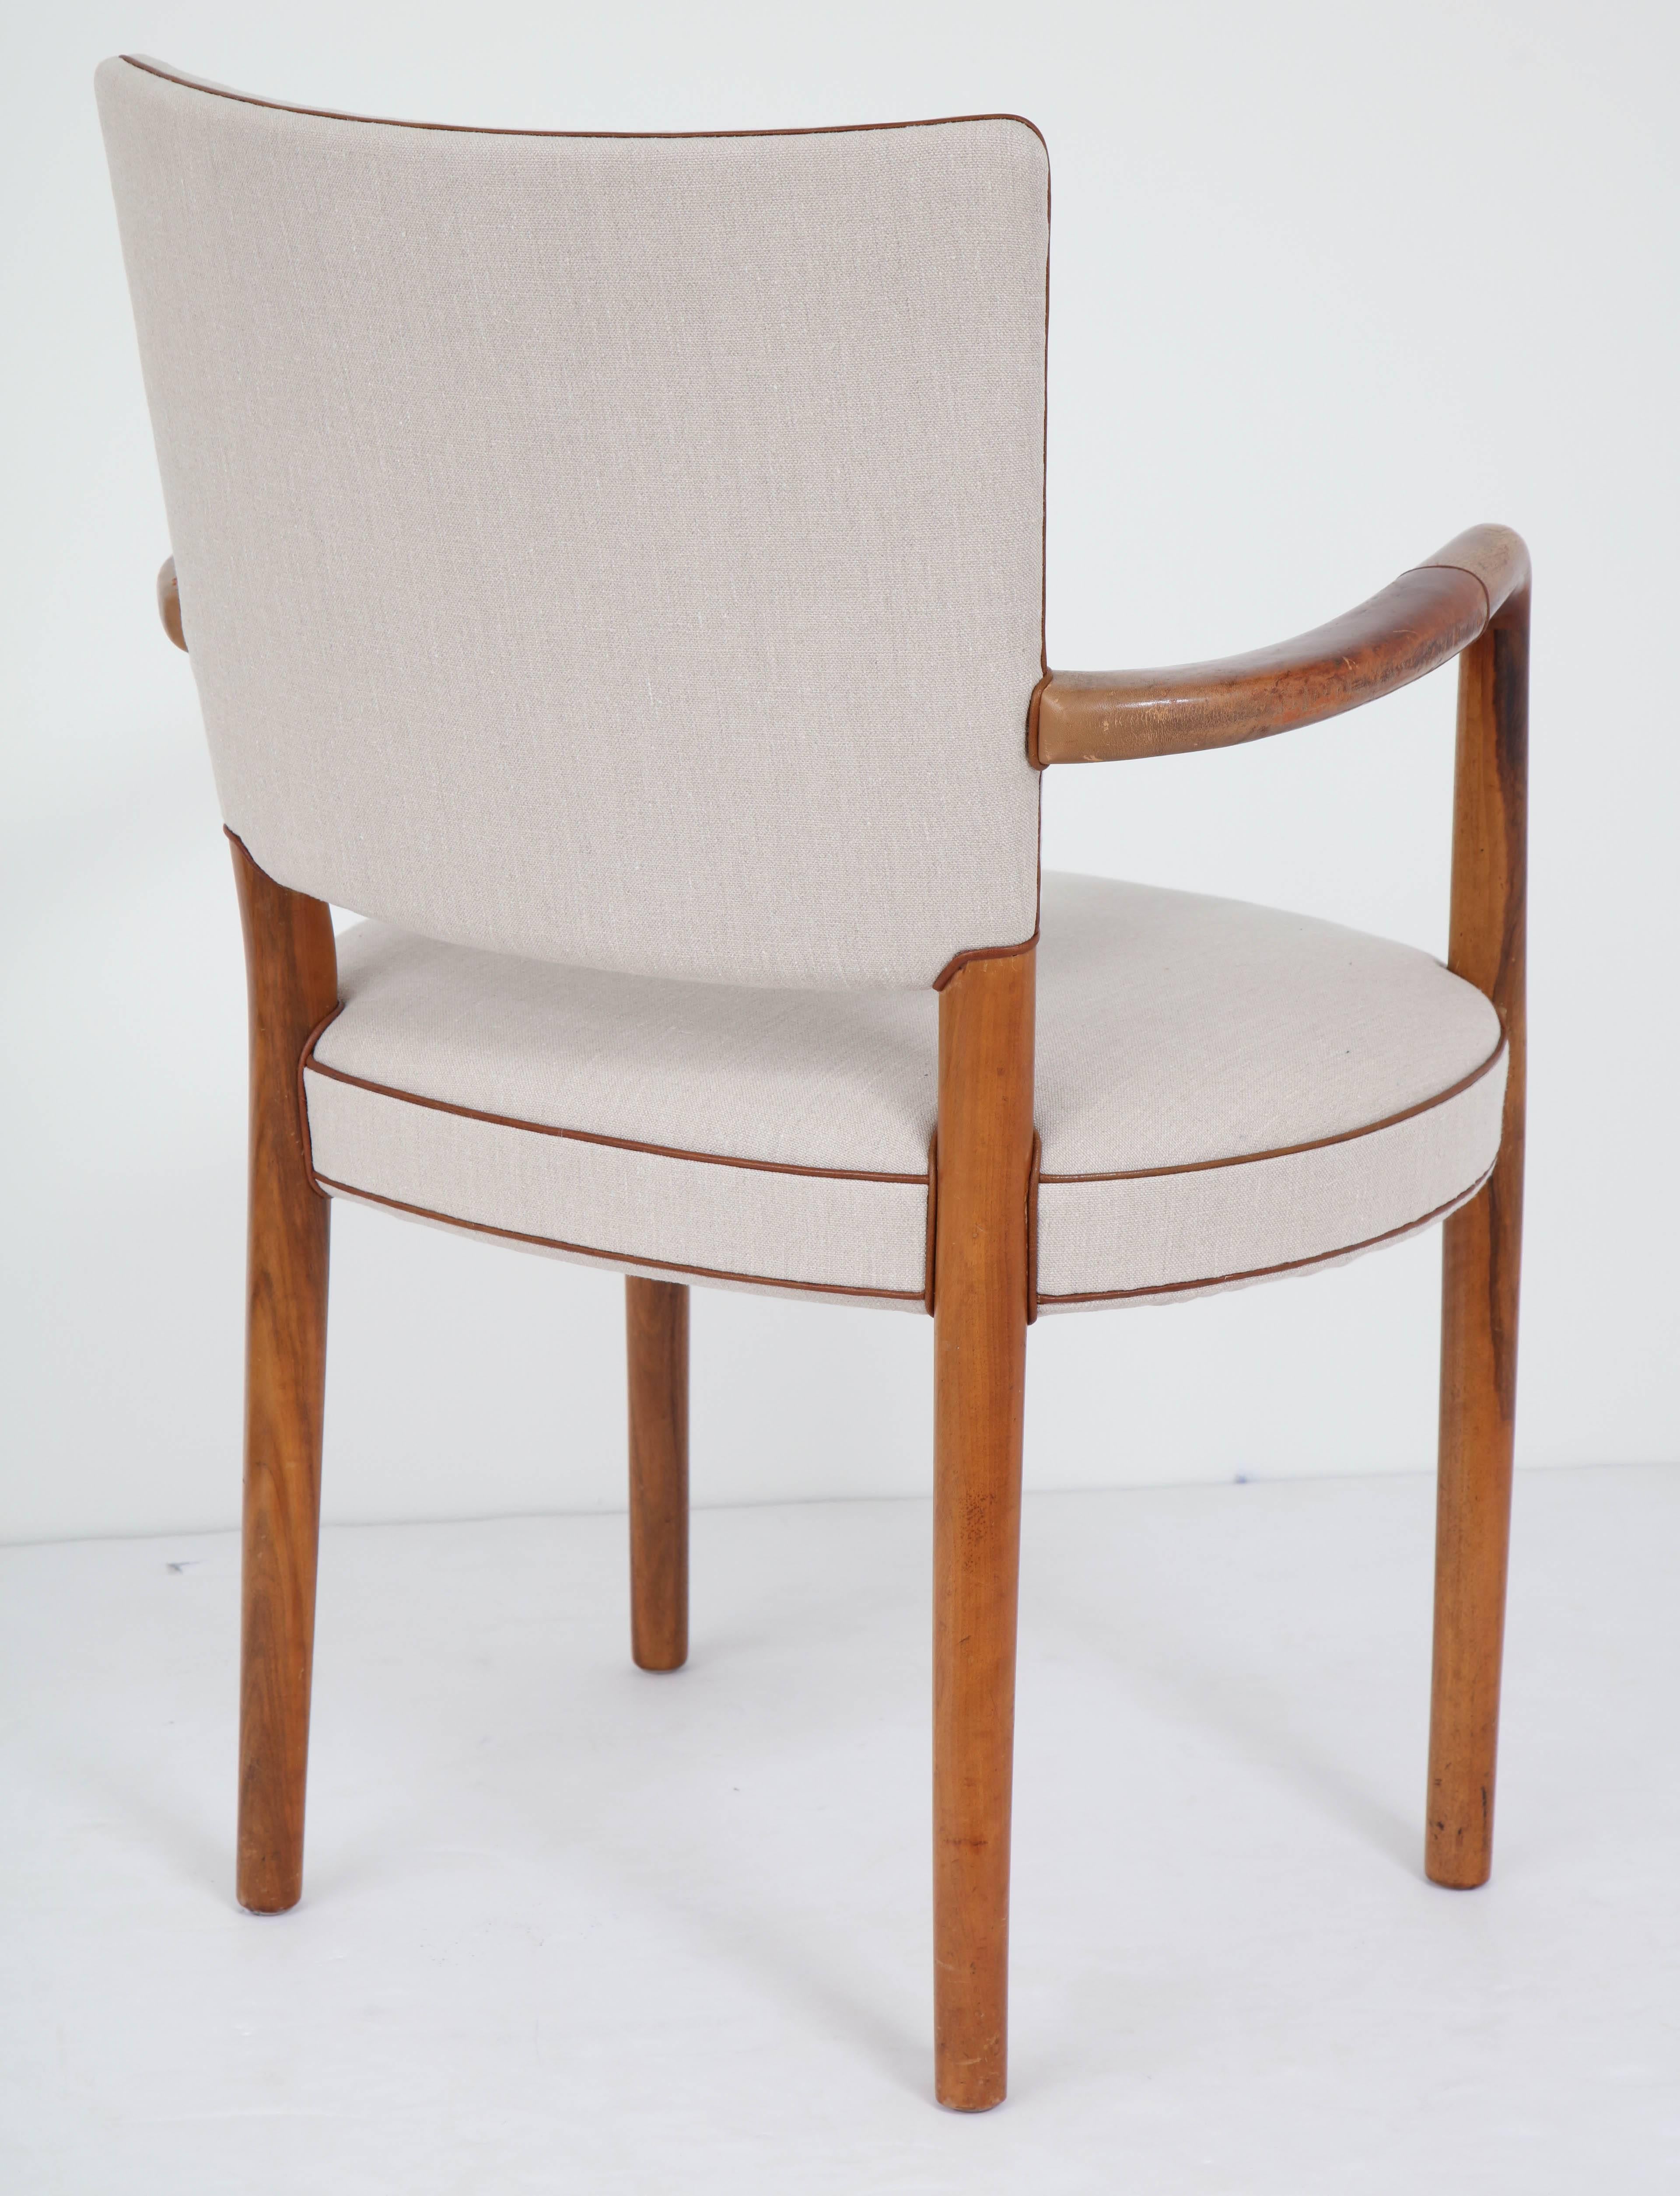 Rare Danish Design Chair by Flemming Lassen and Arne Jacobsen, circa 1950s 3